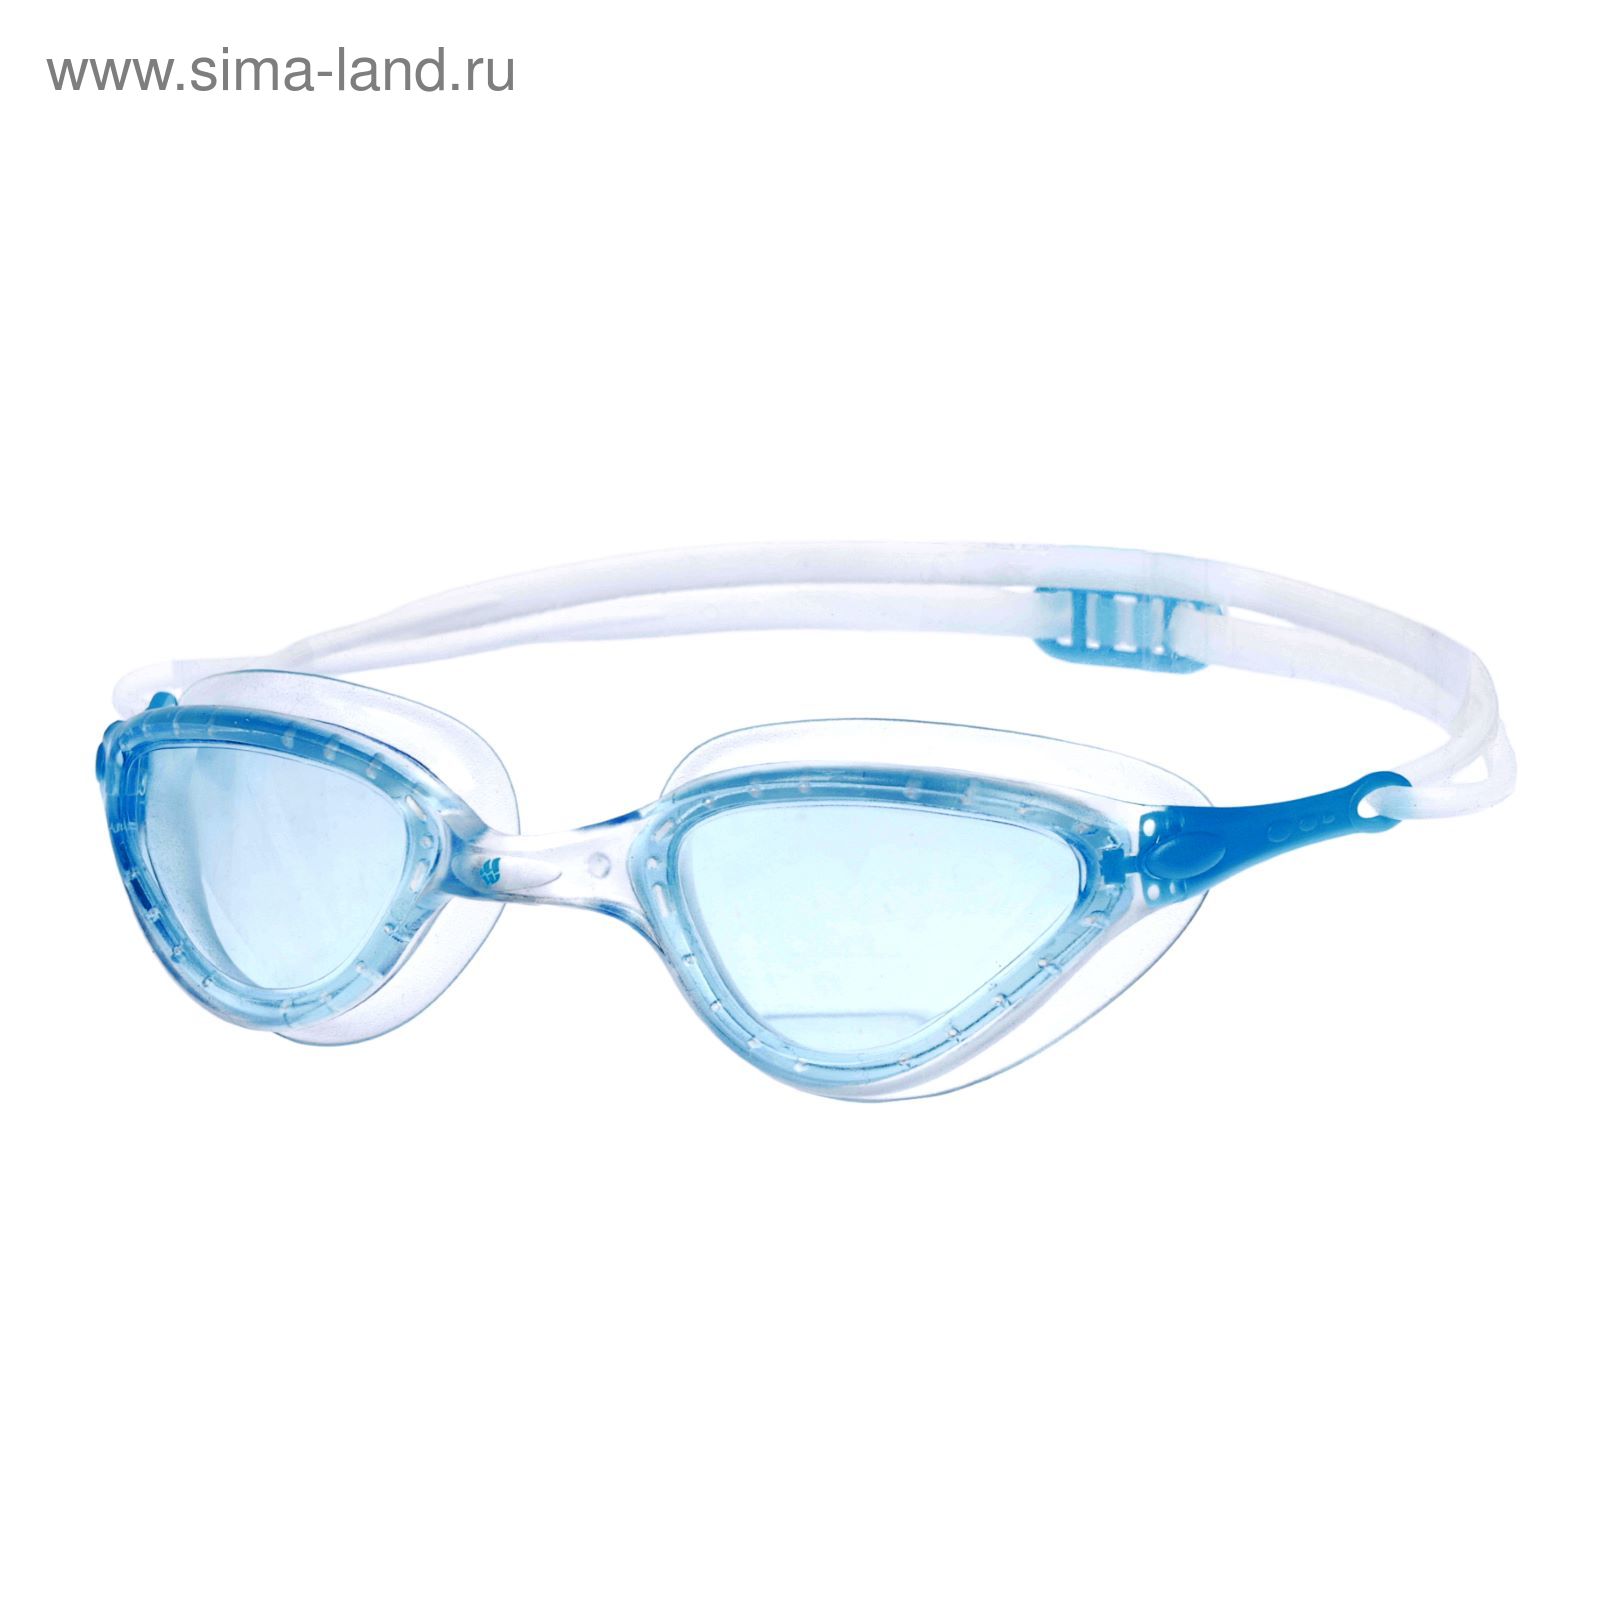 Очки для плавания FIT, Azure M0426 11 0 08W